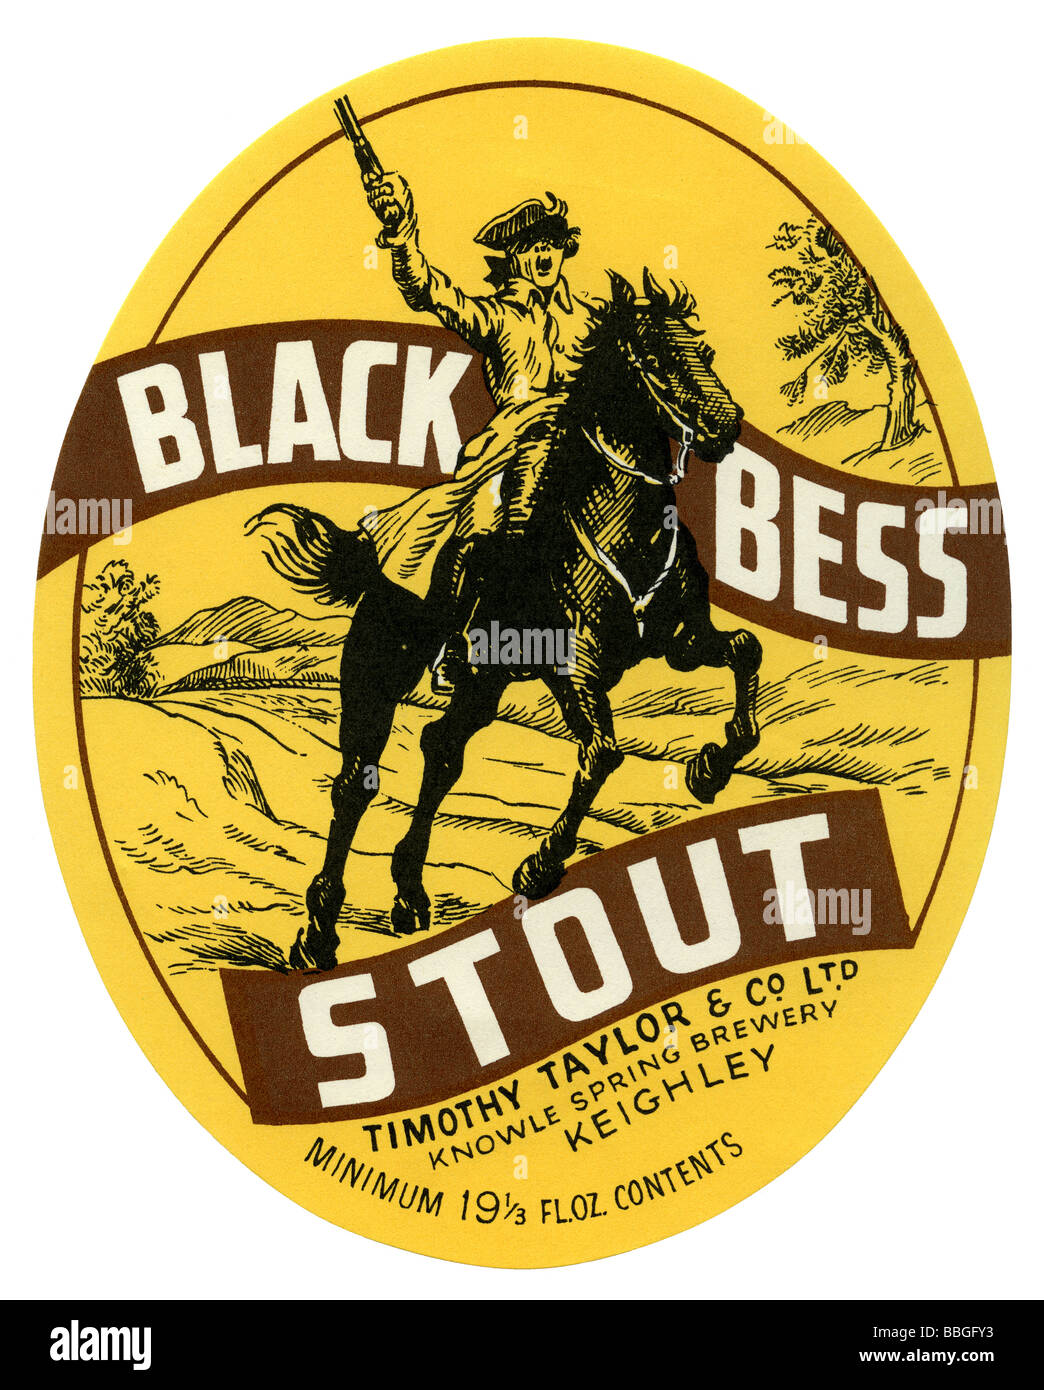 Vecchia birra britannica etichetta per Timothy Taylor di Black Bess Stout, Keighley, West Yorkshire Foto Stock